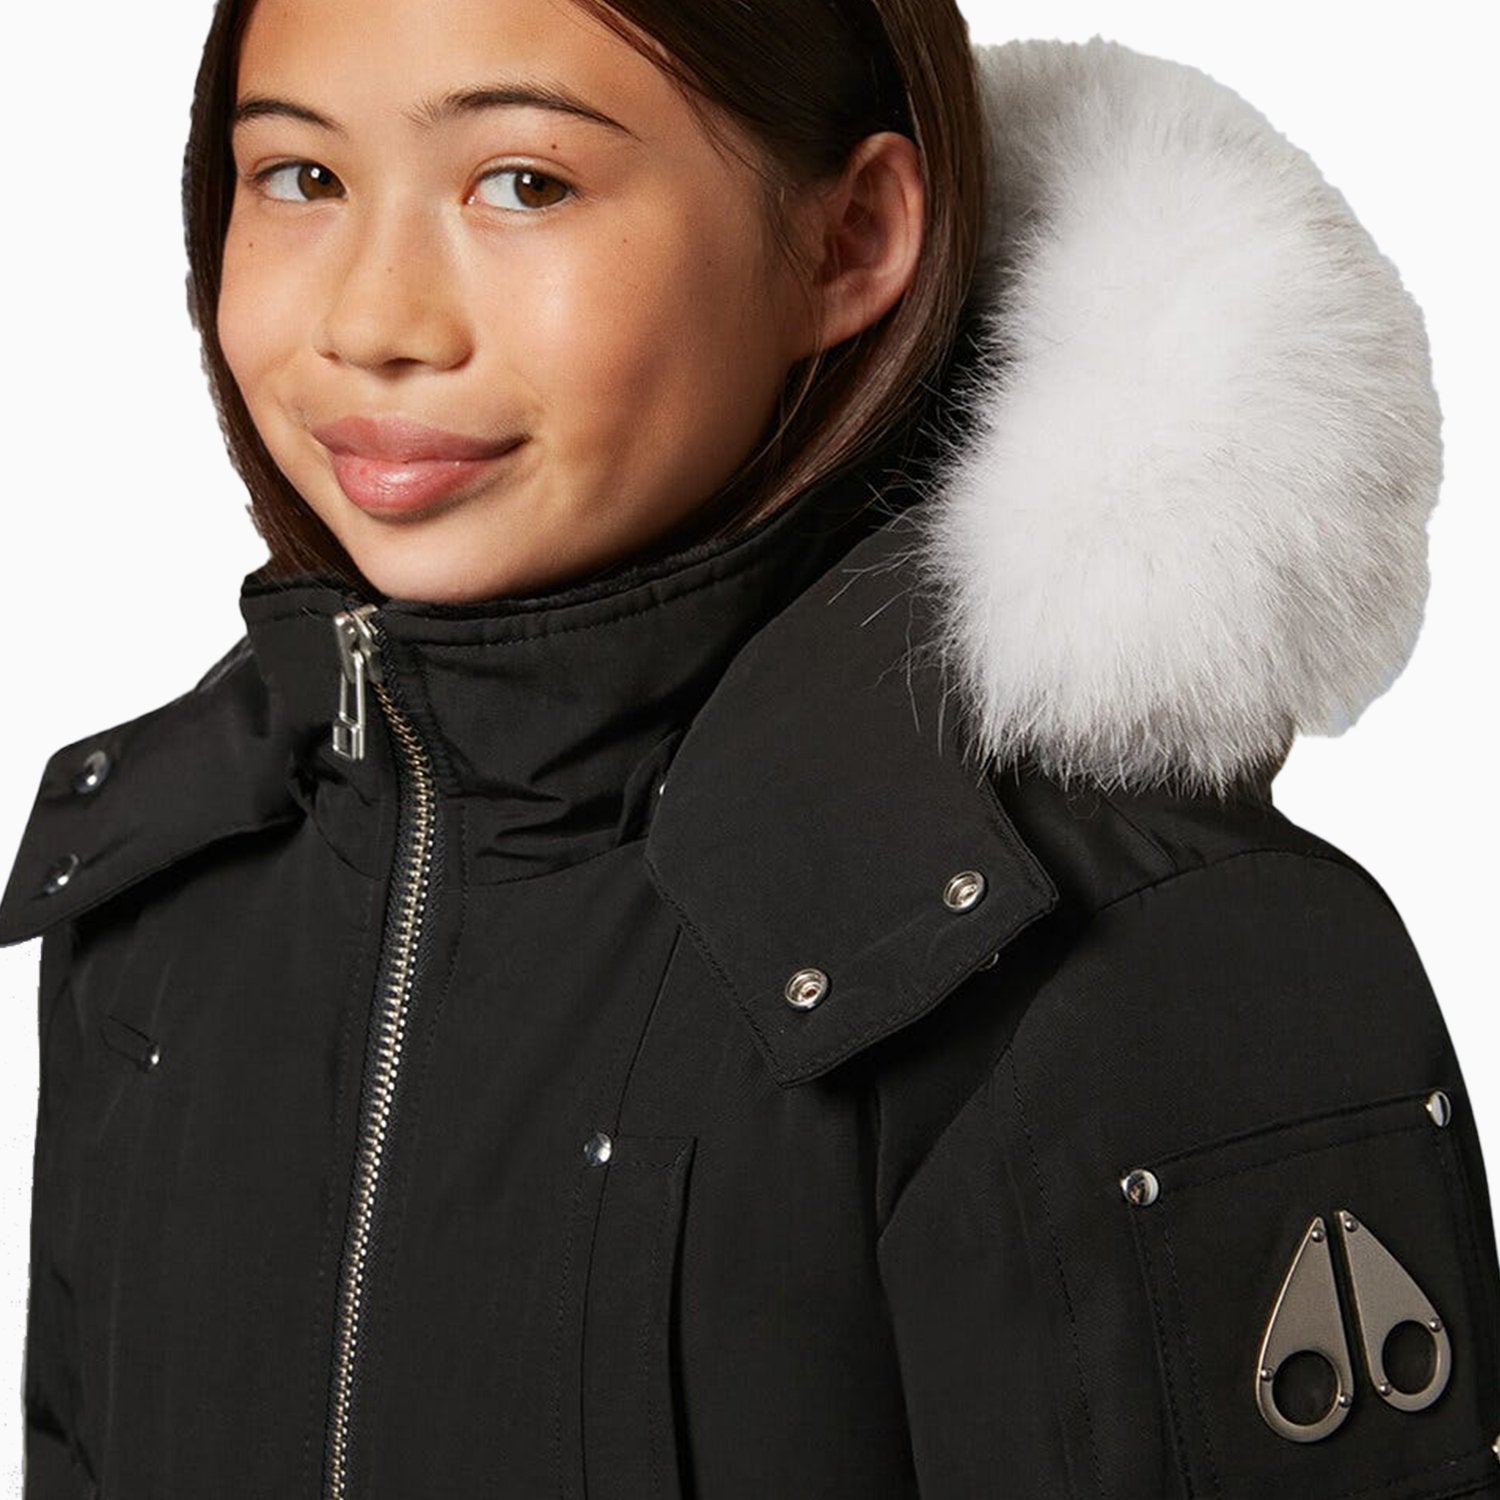 Moose Knuckles Kid's Bomber Jacket With Fur Hood - Color: Brit Blue, Arctic Rose, Red, Black, Deep Red, Black white - Kids Premium Clothing -